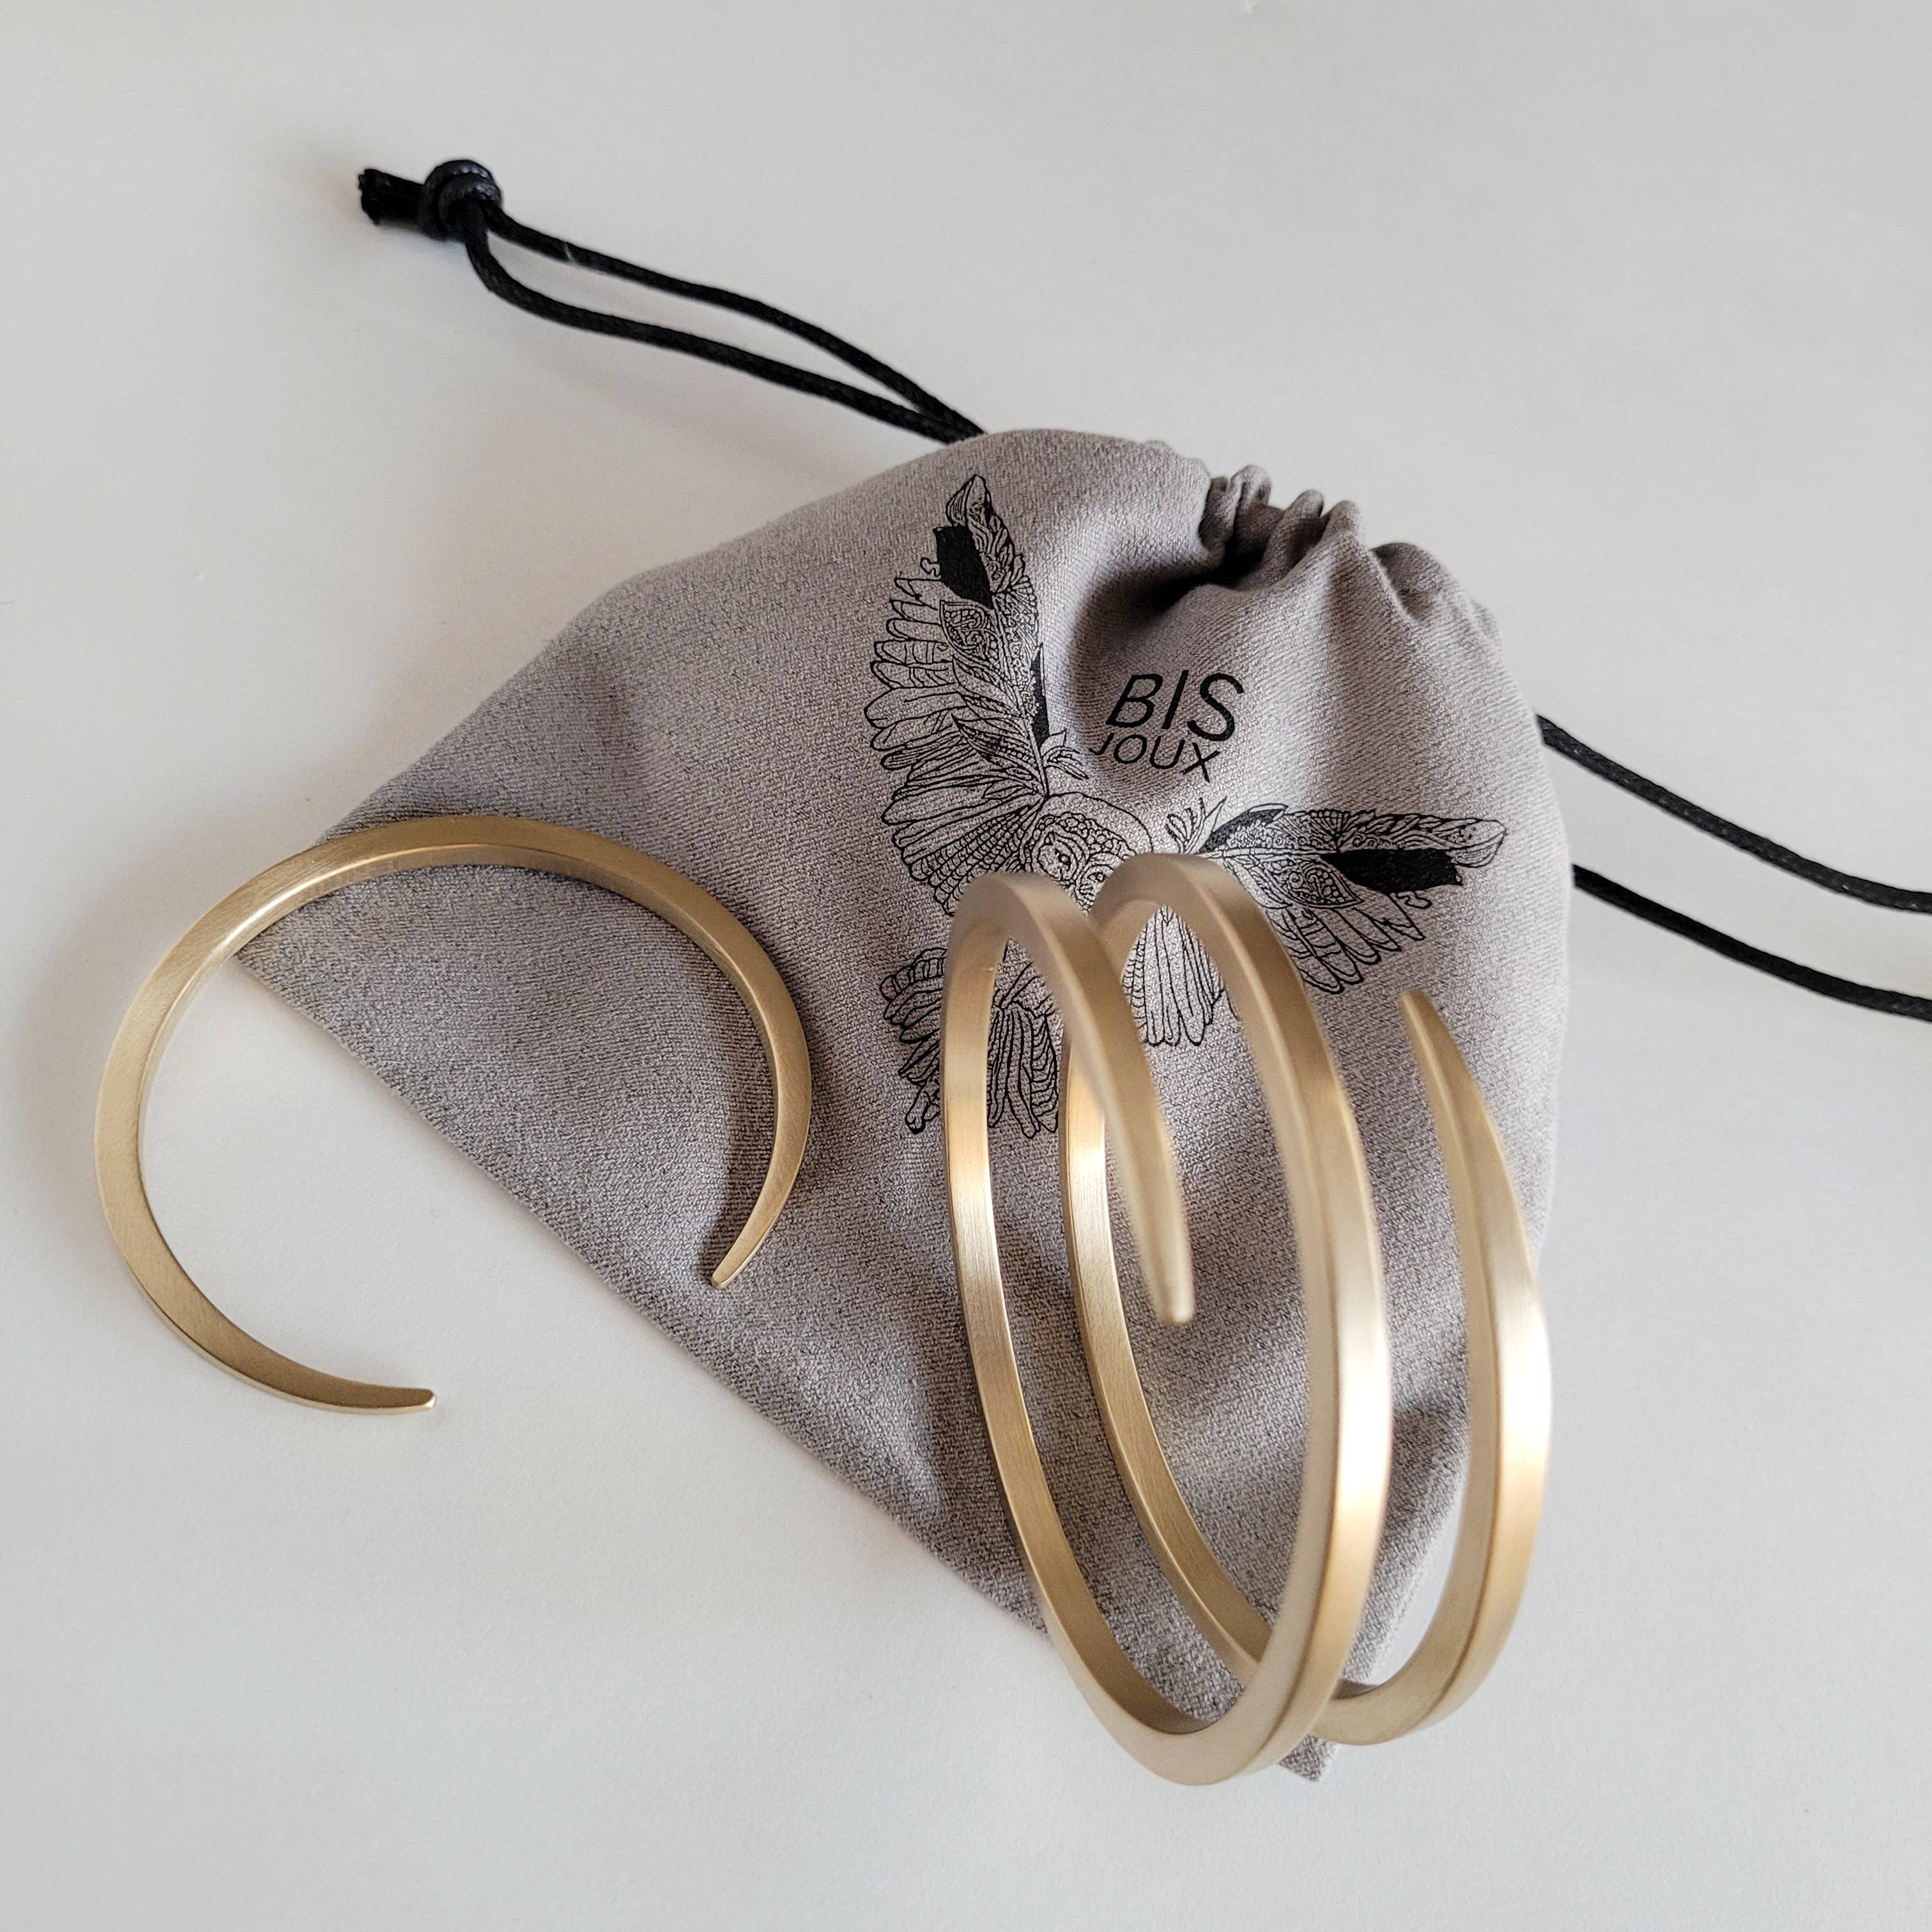 Solid brass handcrafted wrap swirl bangle cuff bracelet